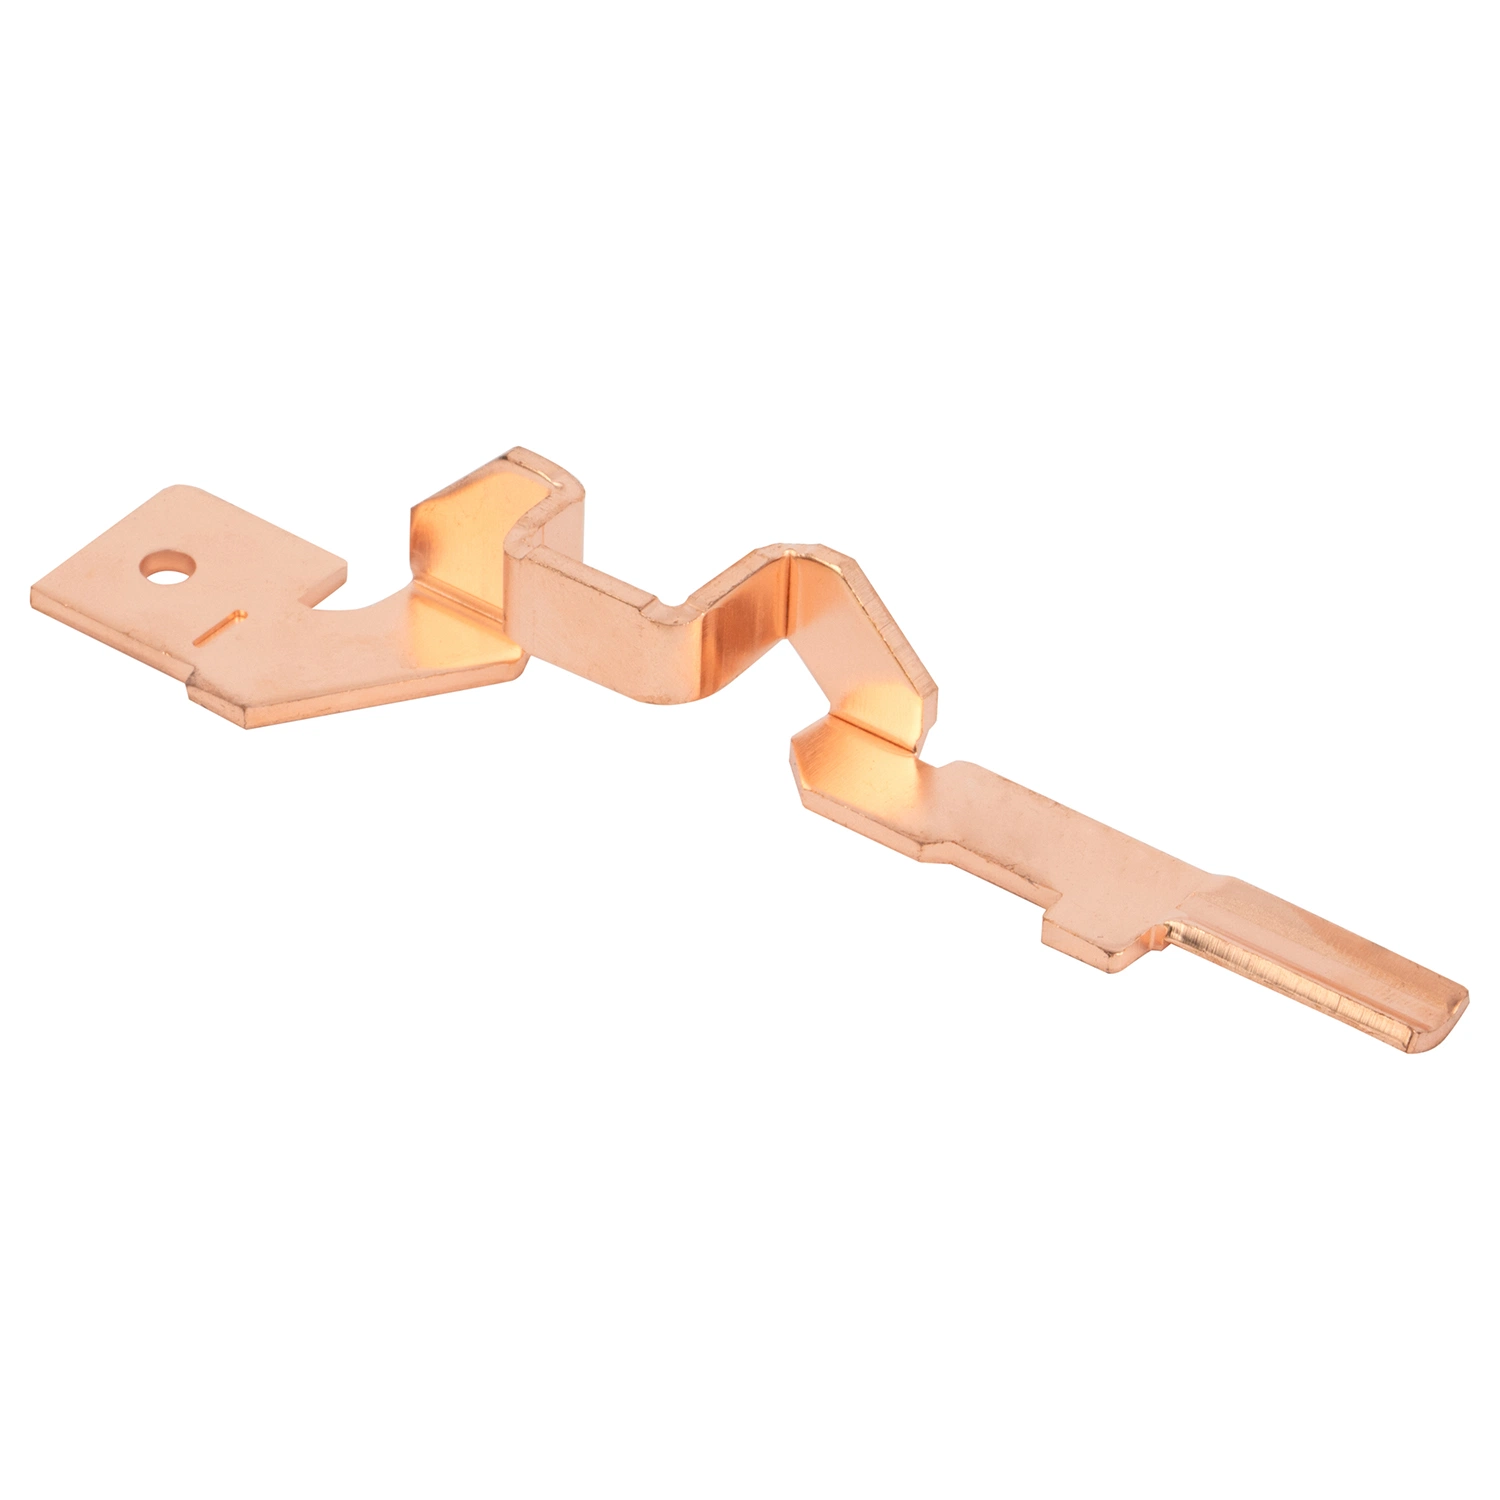 Metal Stamping Manganese Copper Static Spring Solder Lug Plug Terminal Connector Electrical Parts